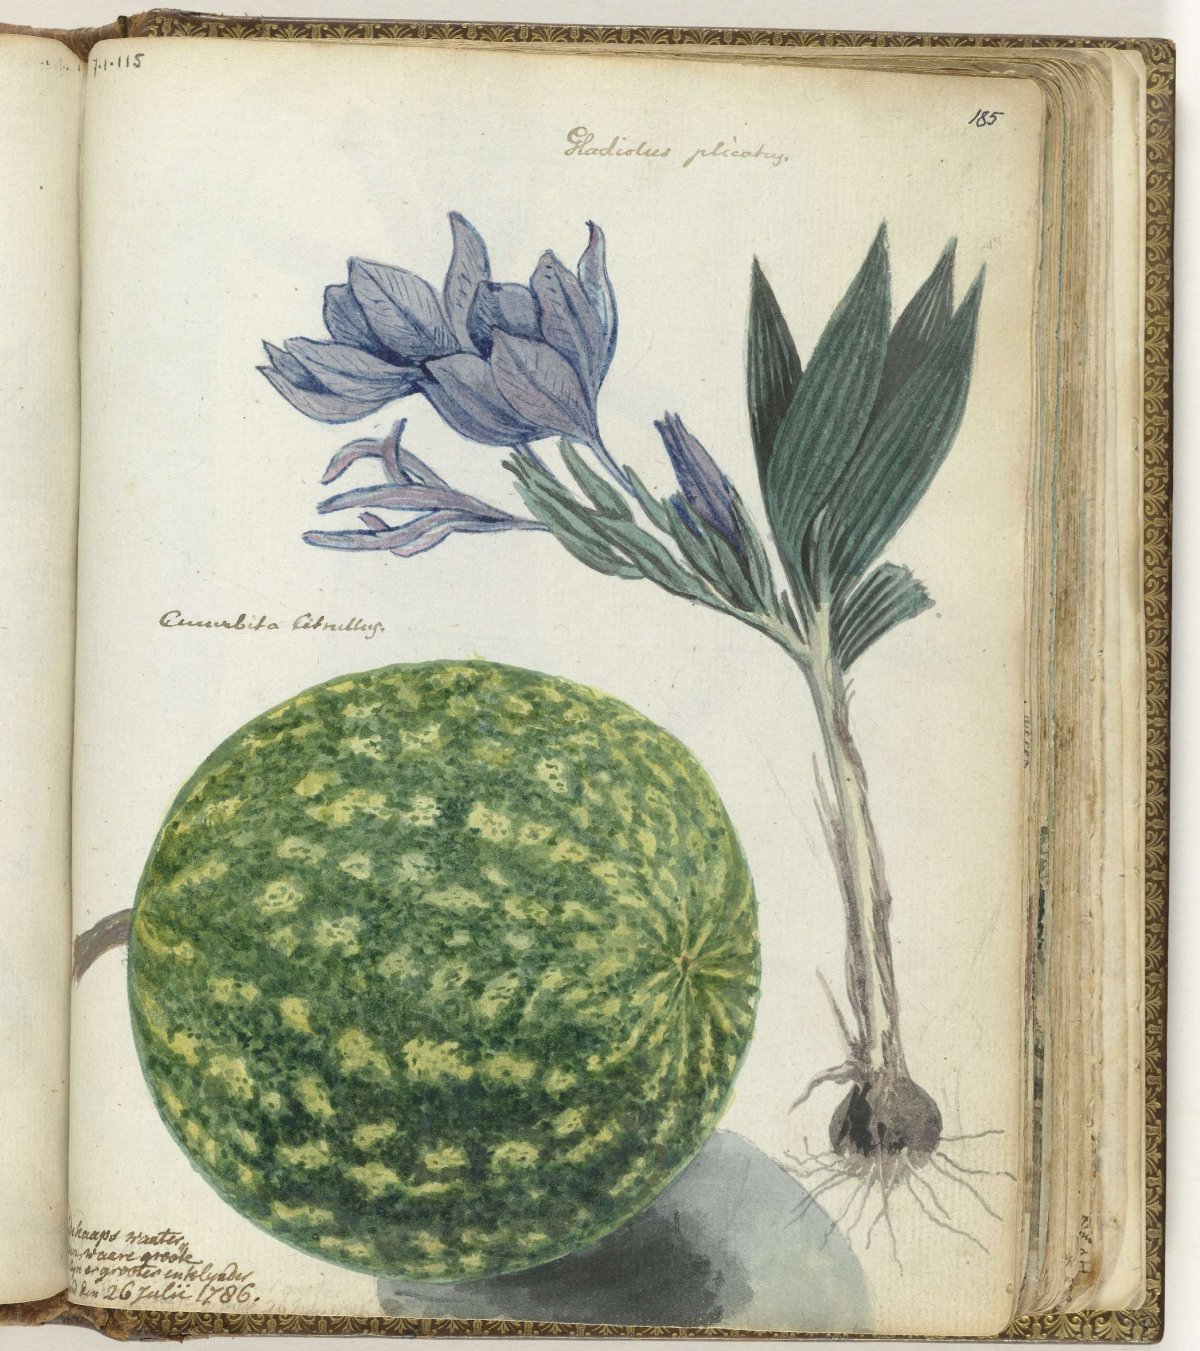 Cape watermelon and gladiolus, Jan Brandes, 1786